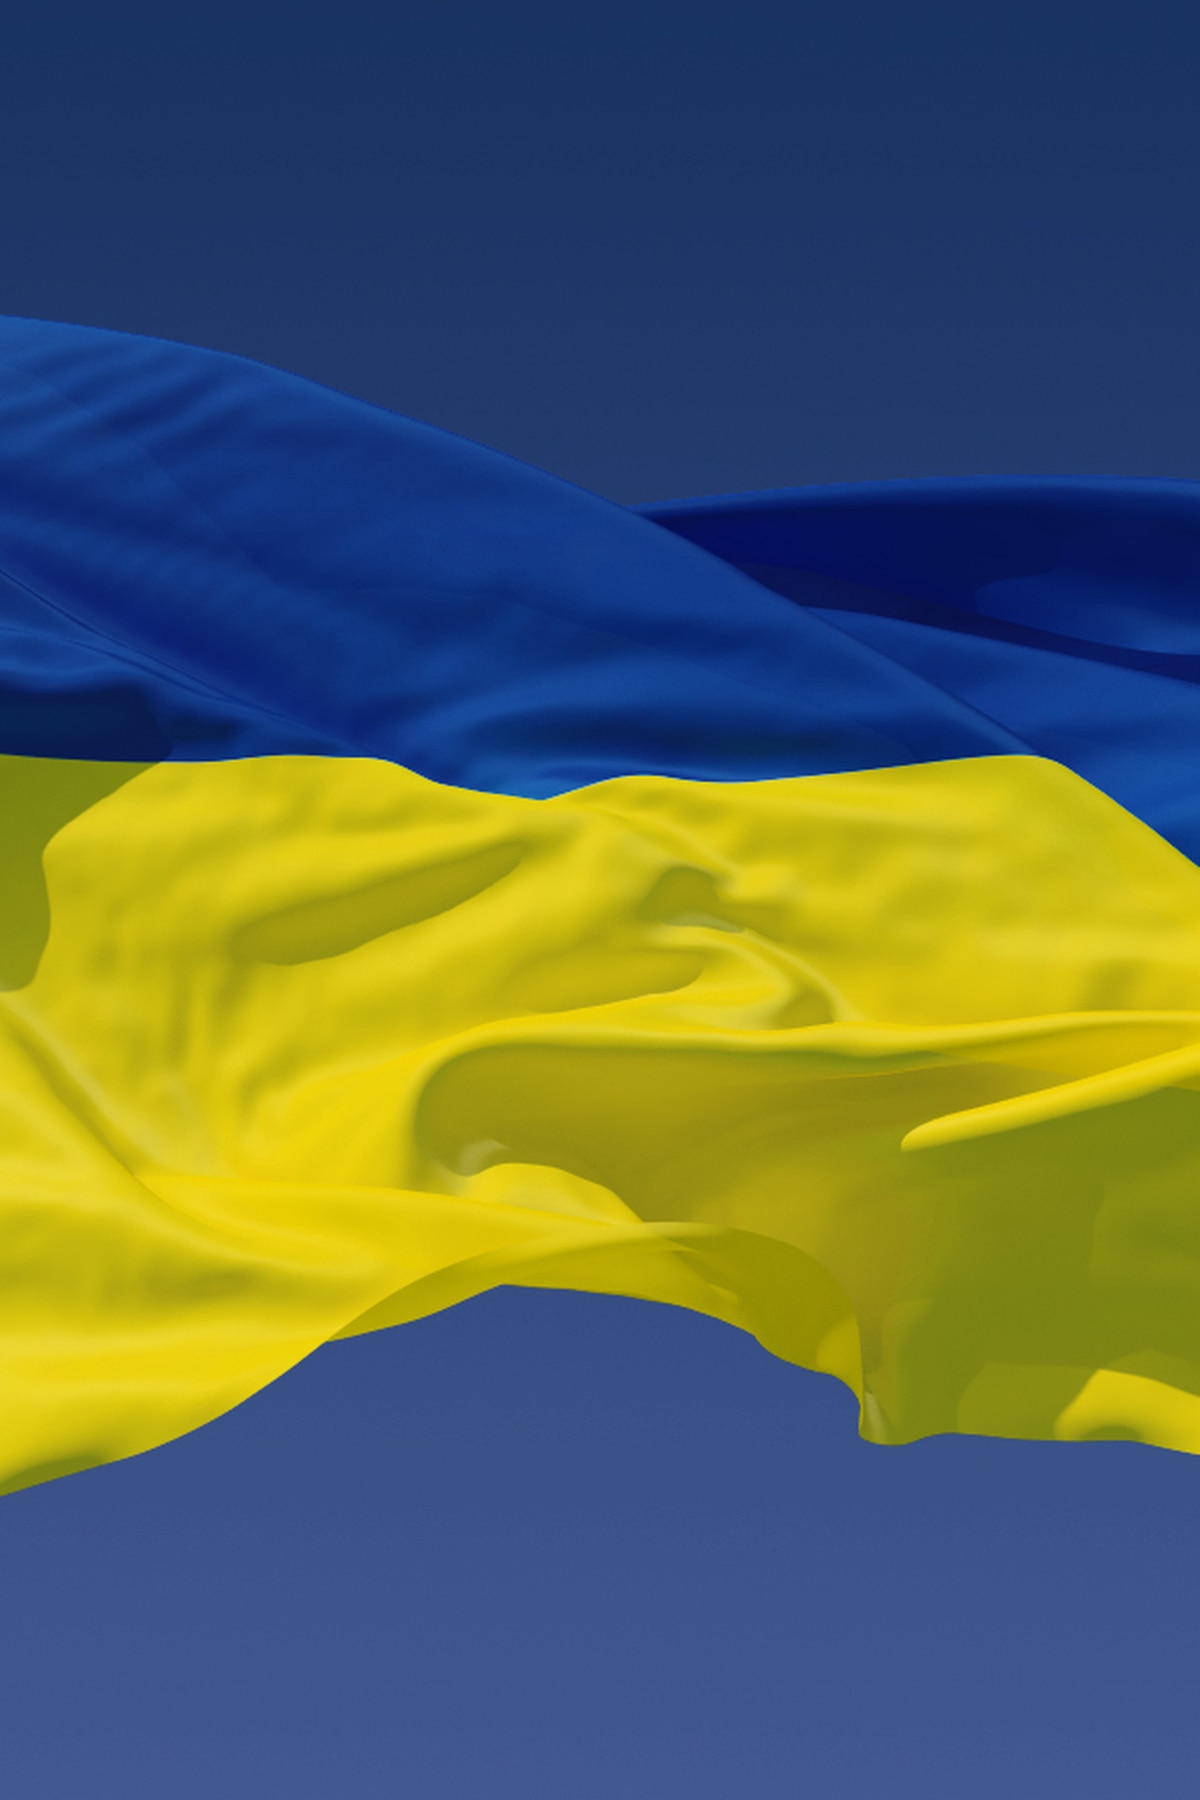 How Yoopers can support Ukraine